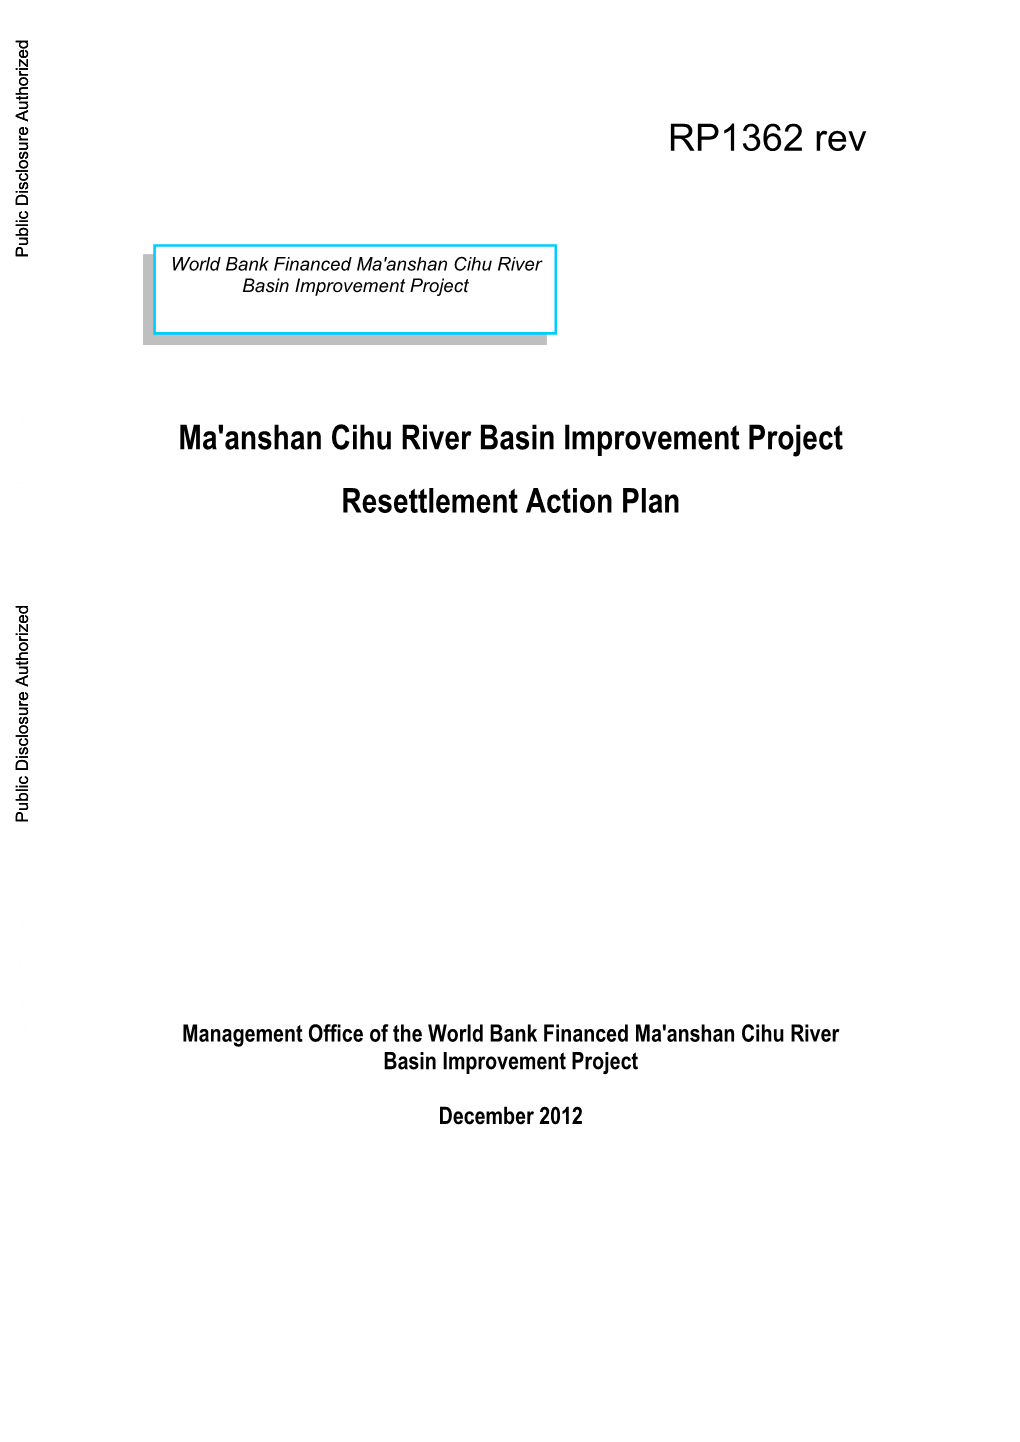 Ma'anshan Cihu River Basin Improvement Project Resettlement Action Plan